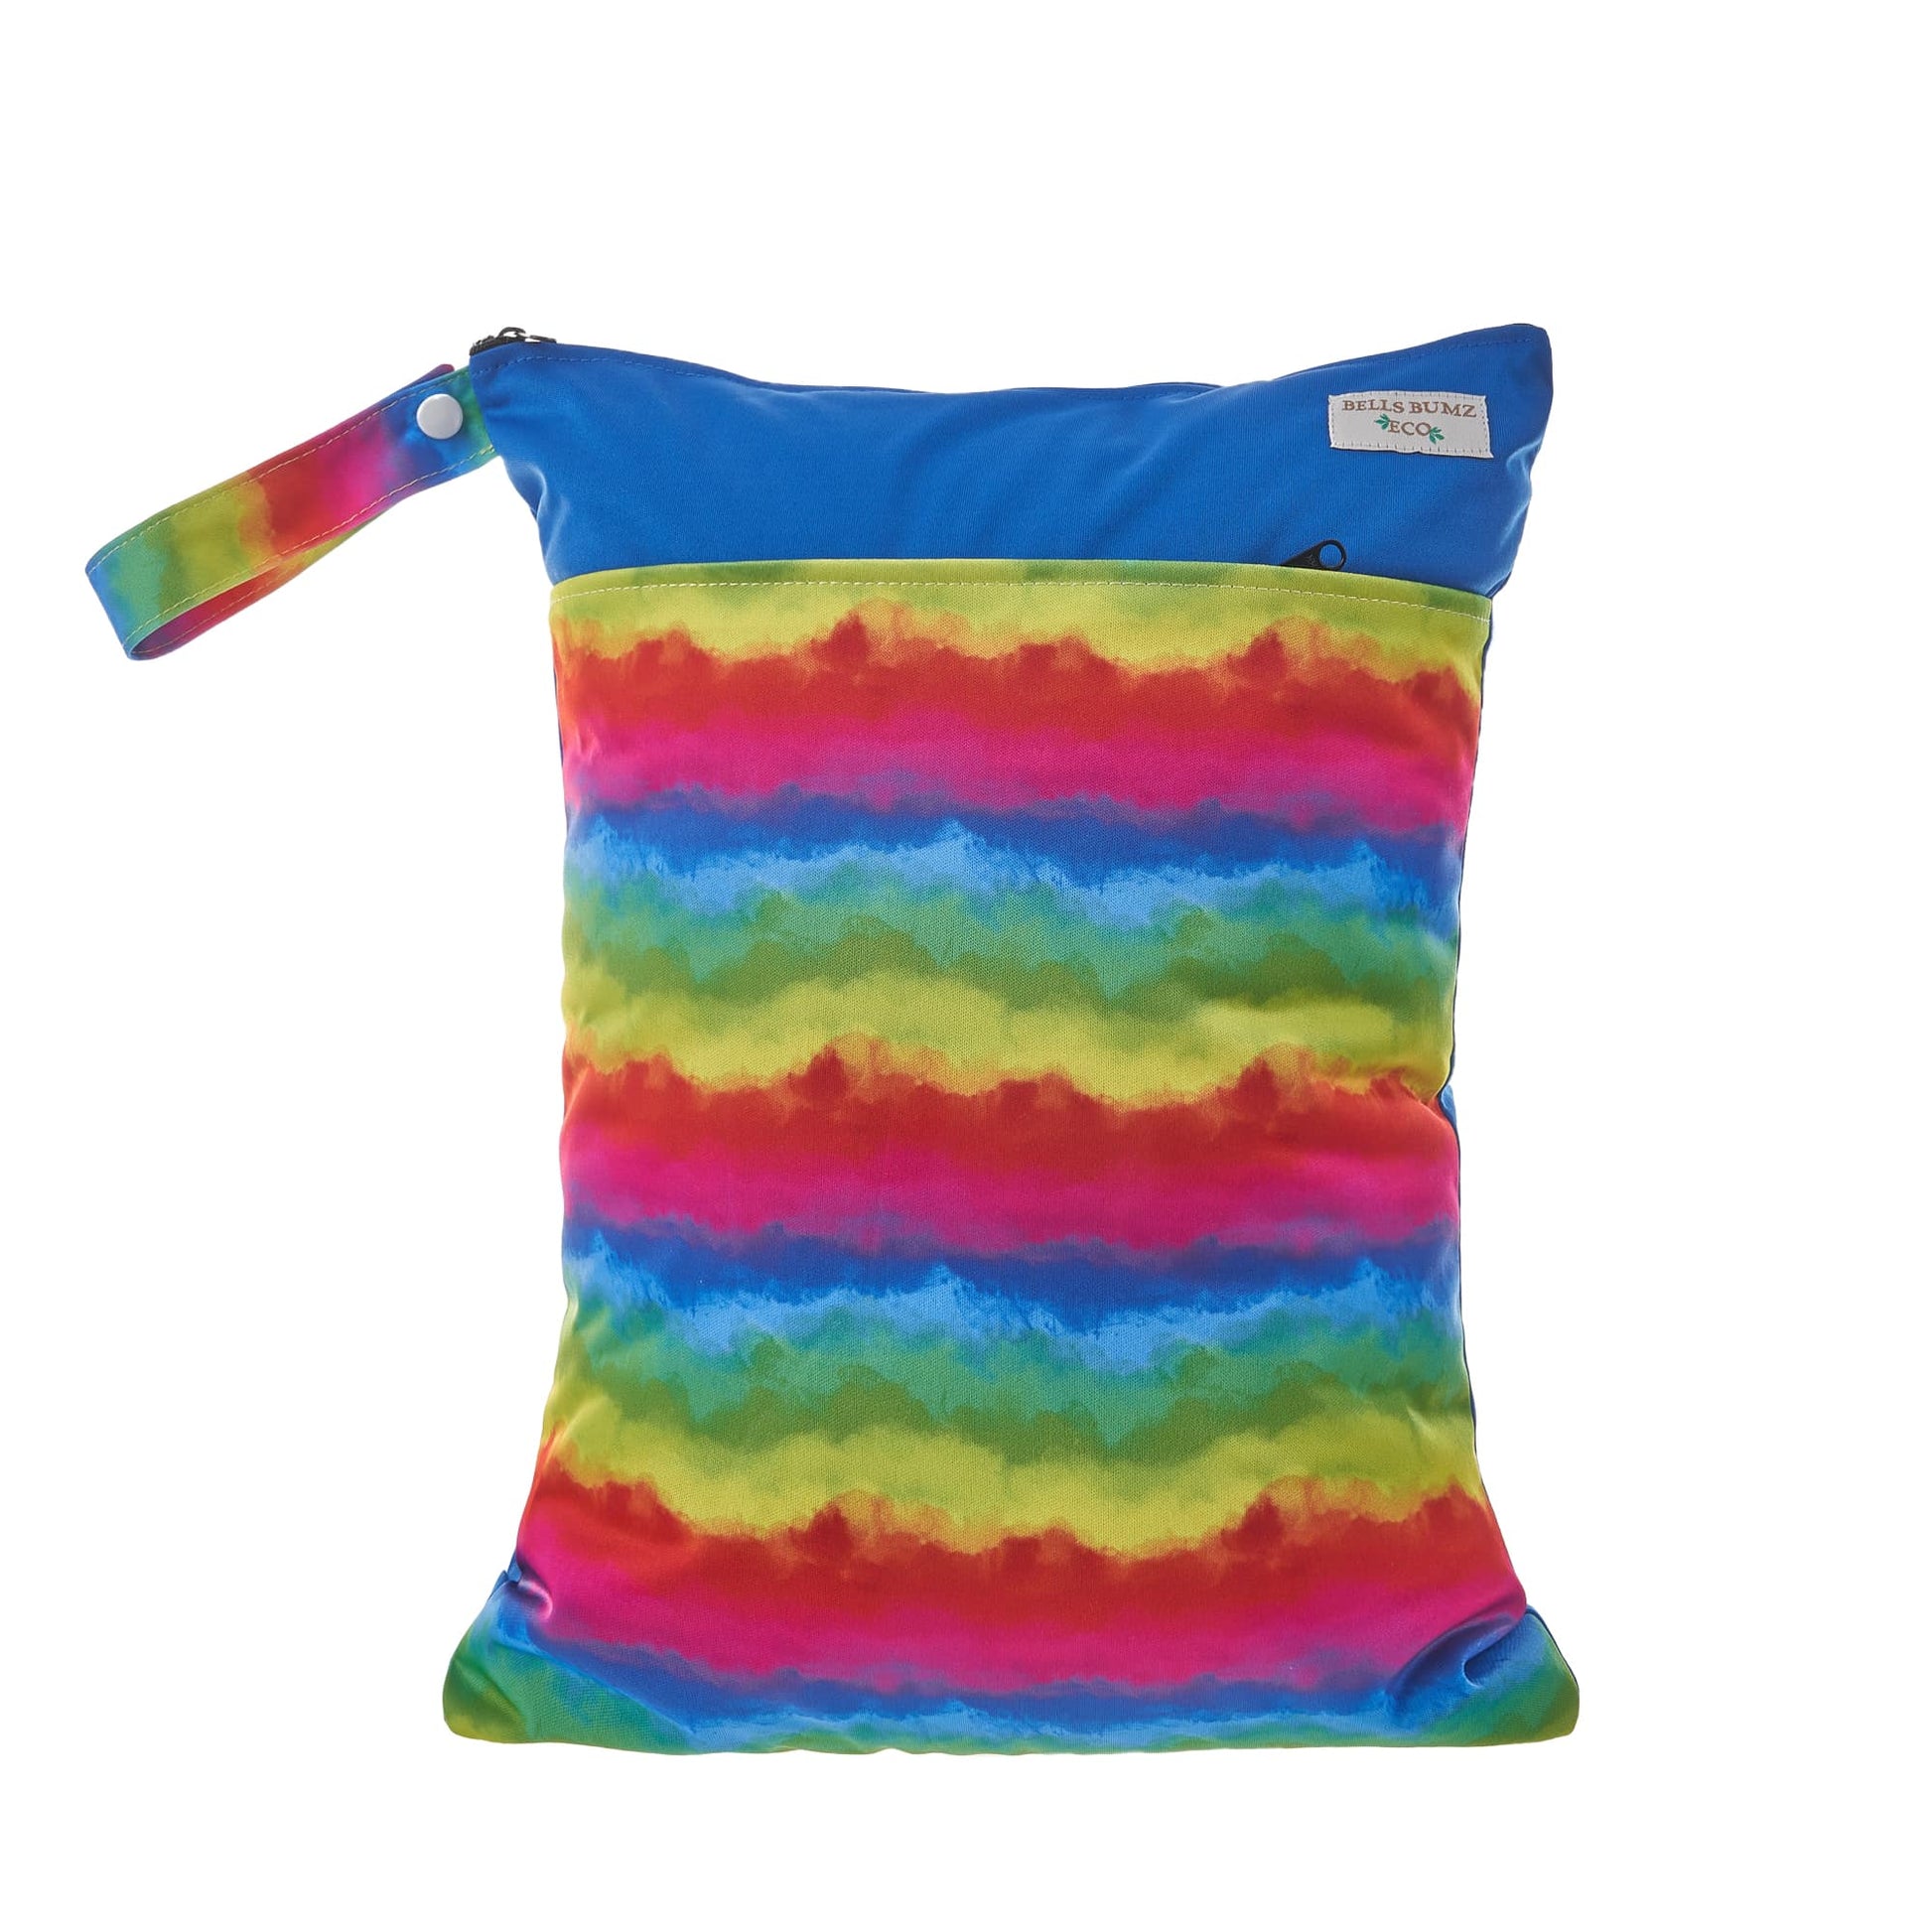 Medium wet bag with a rainbow stripe pattern.